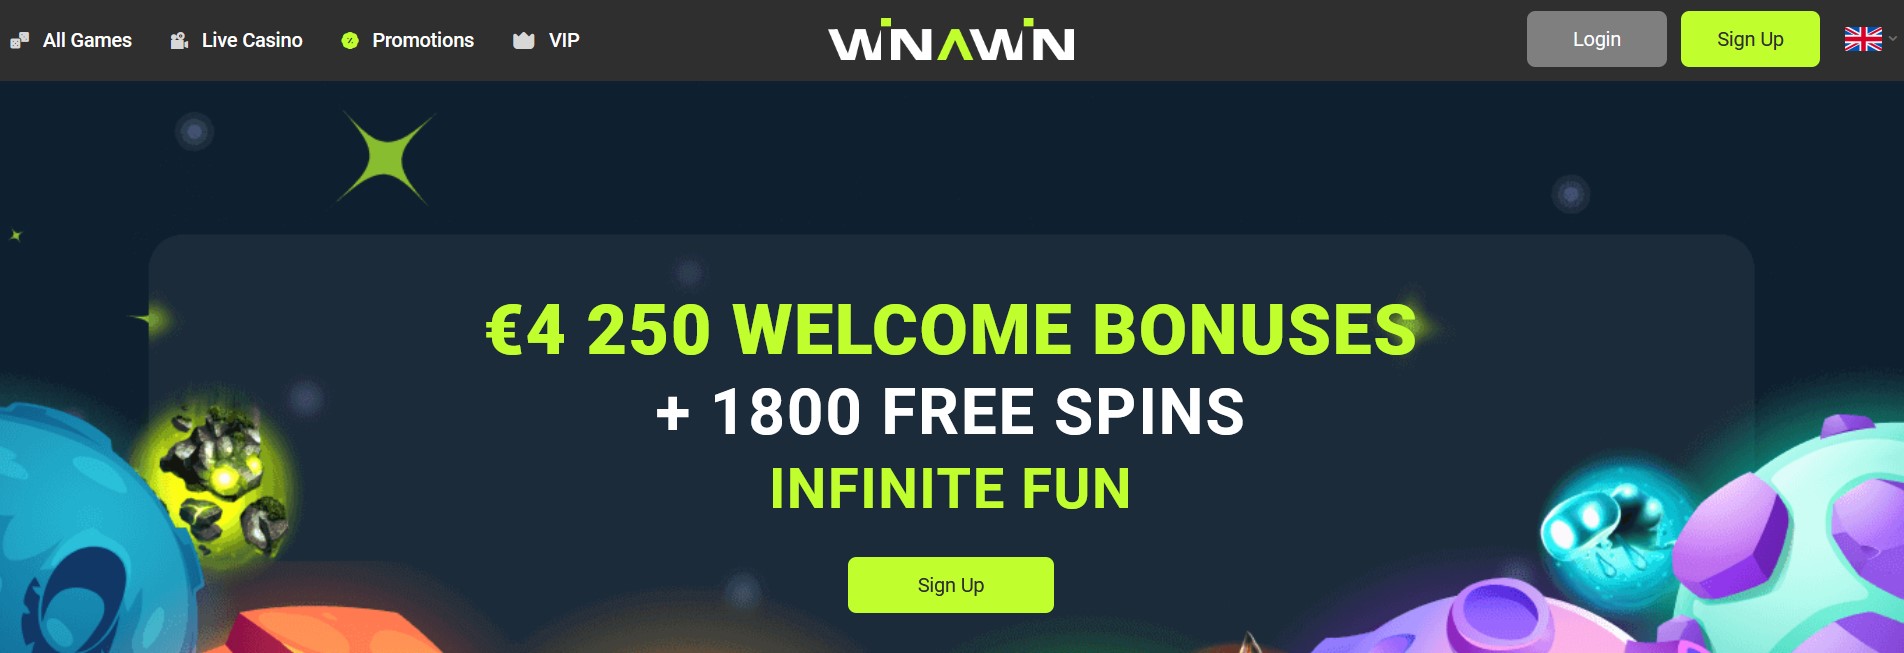 Winawin Freespins Welcome Bonus